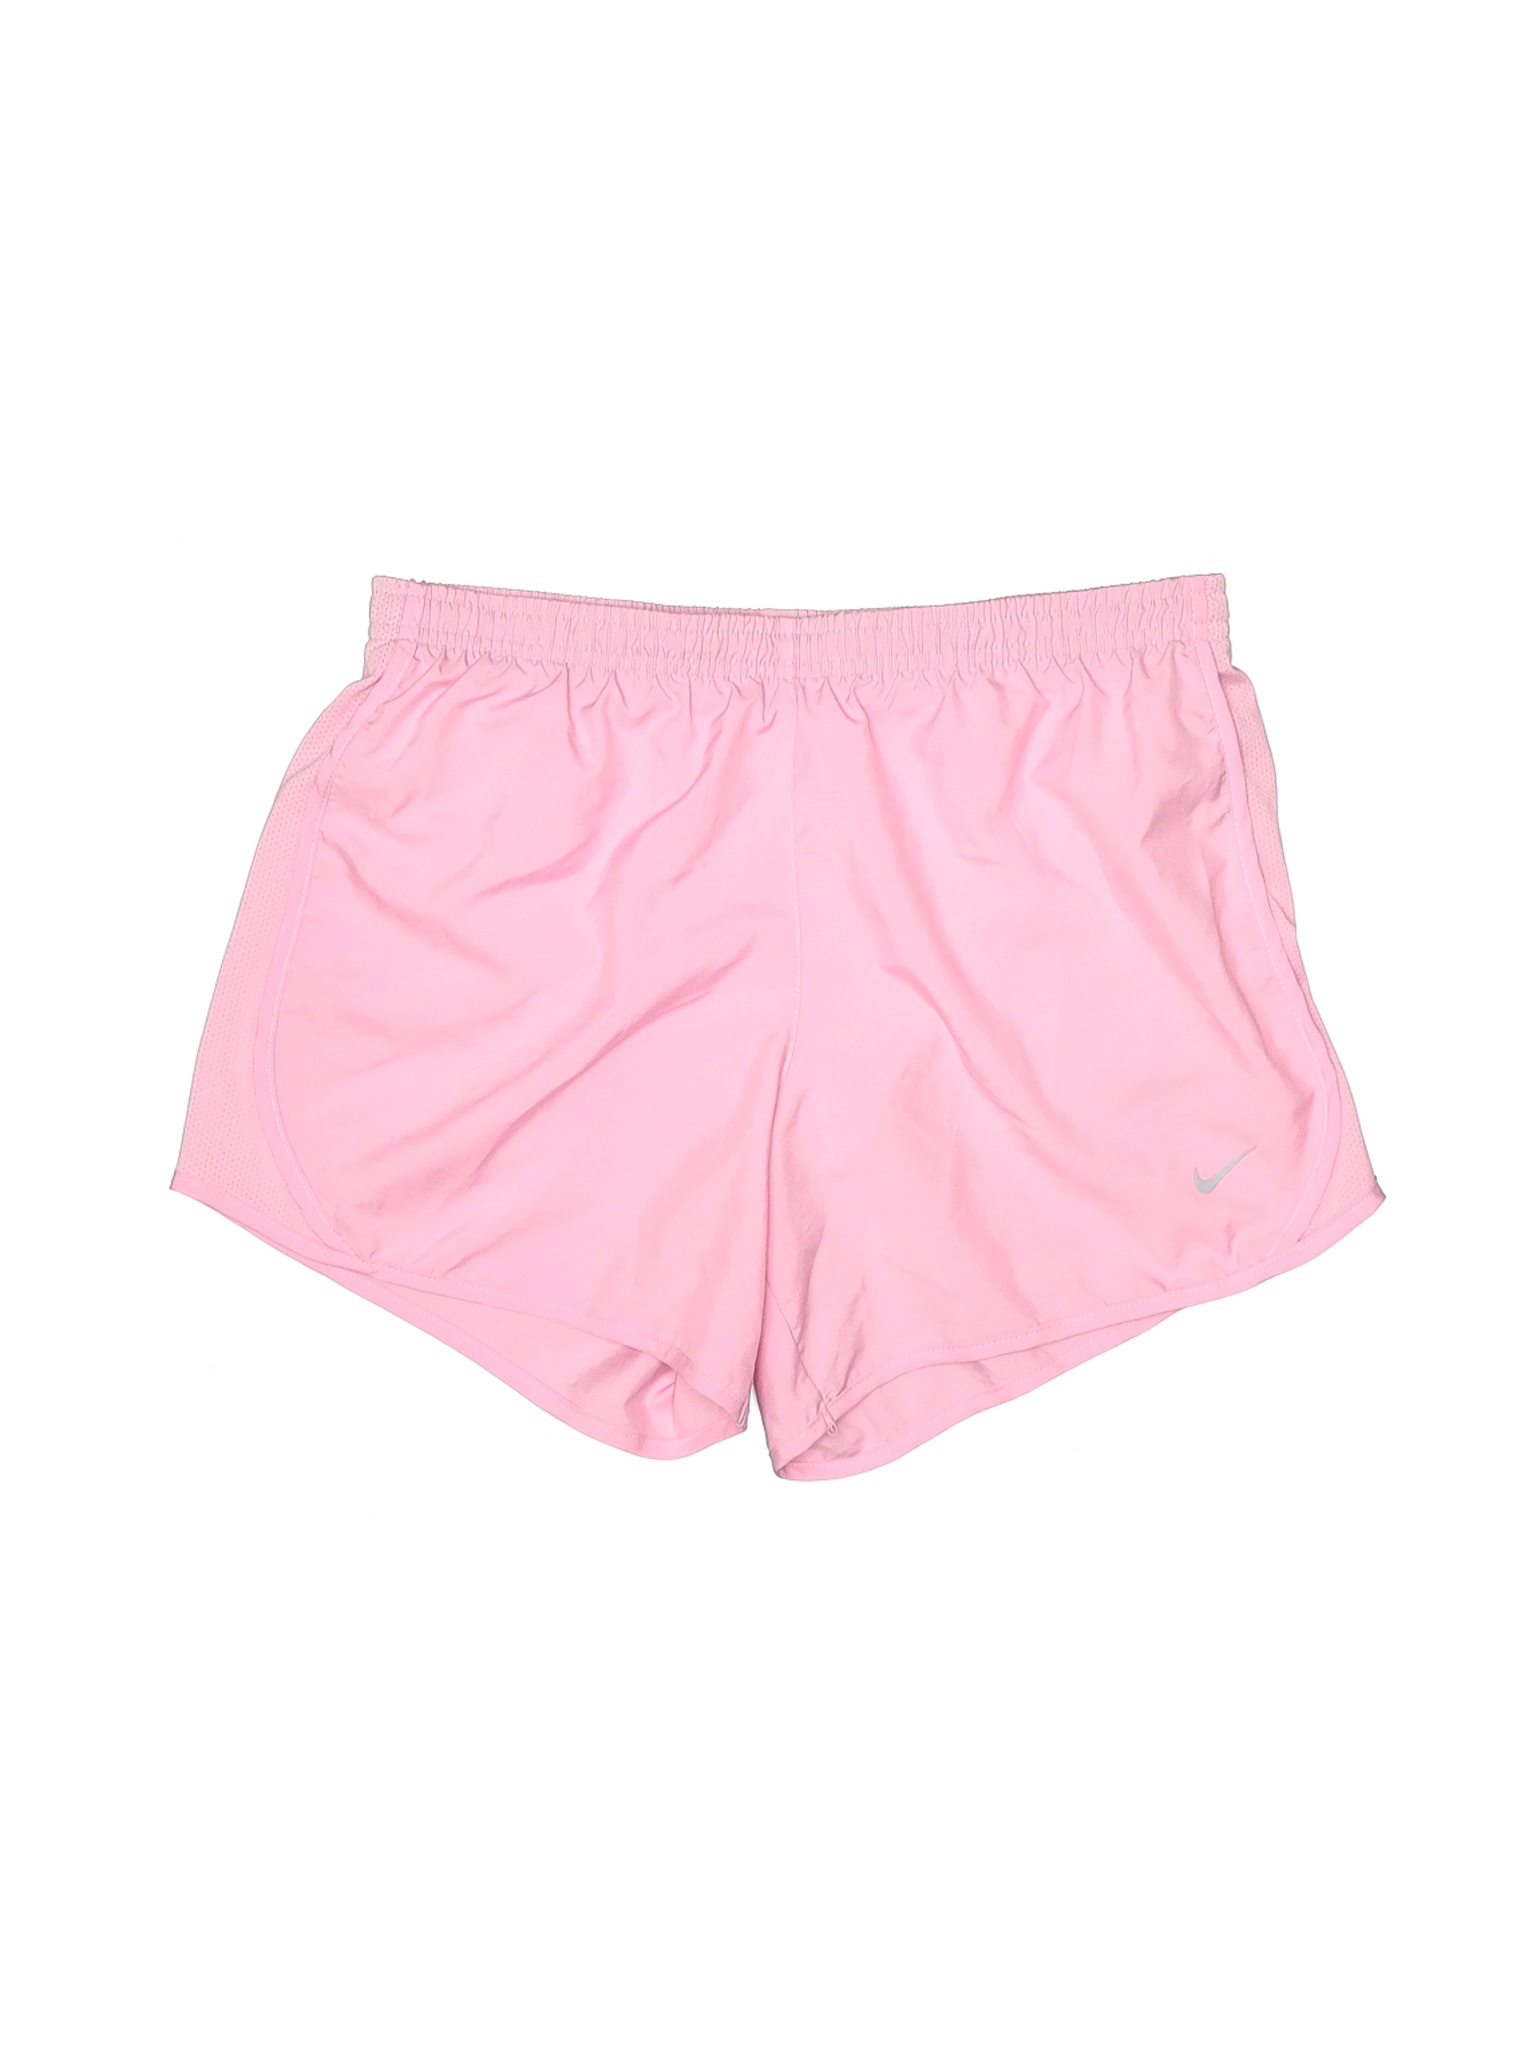 Nike Girls Pink Athletic Shorts XL Youth | eBay